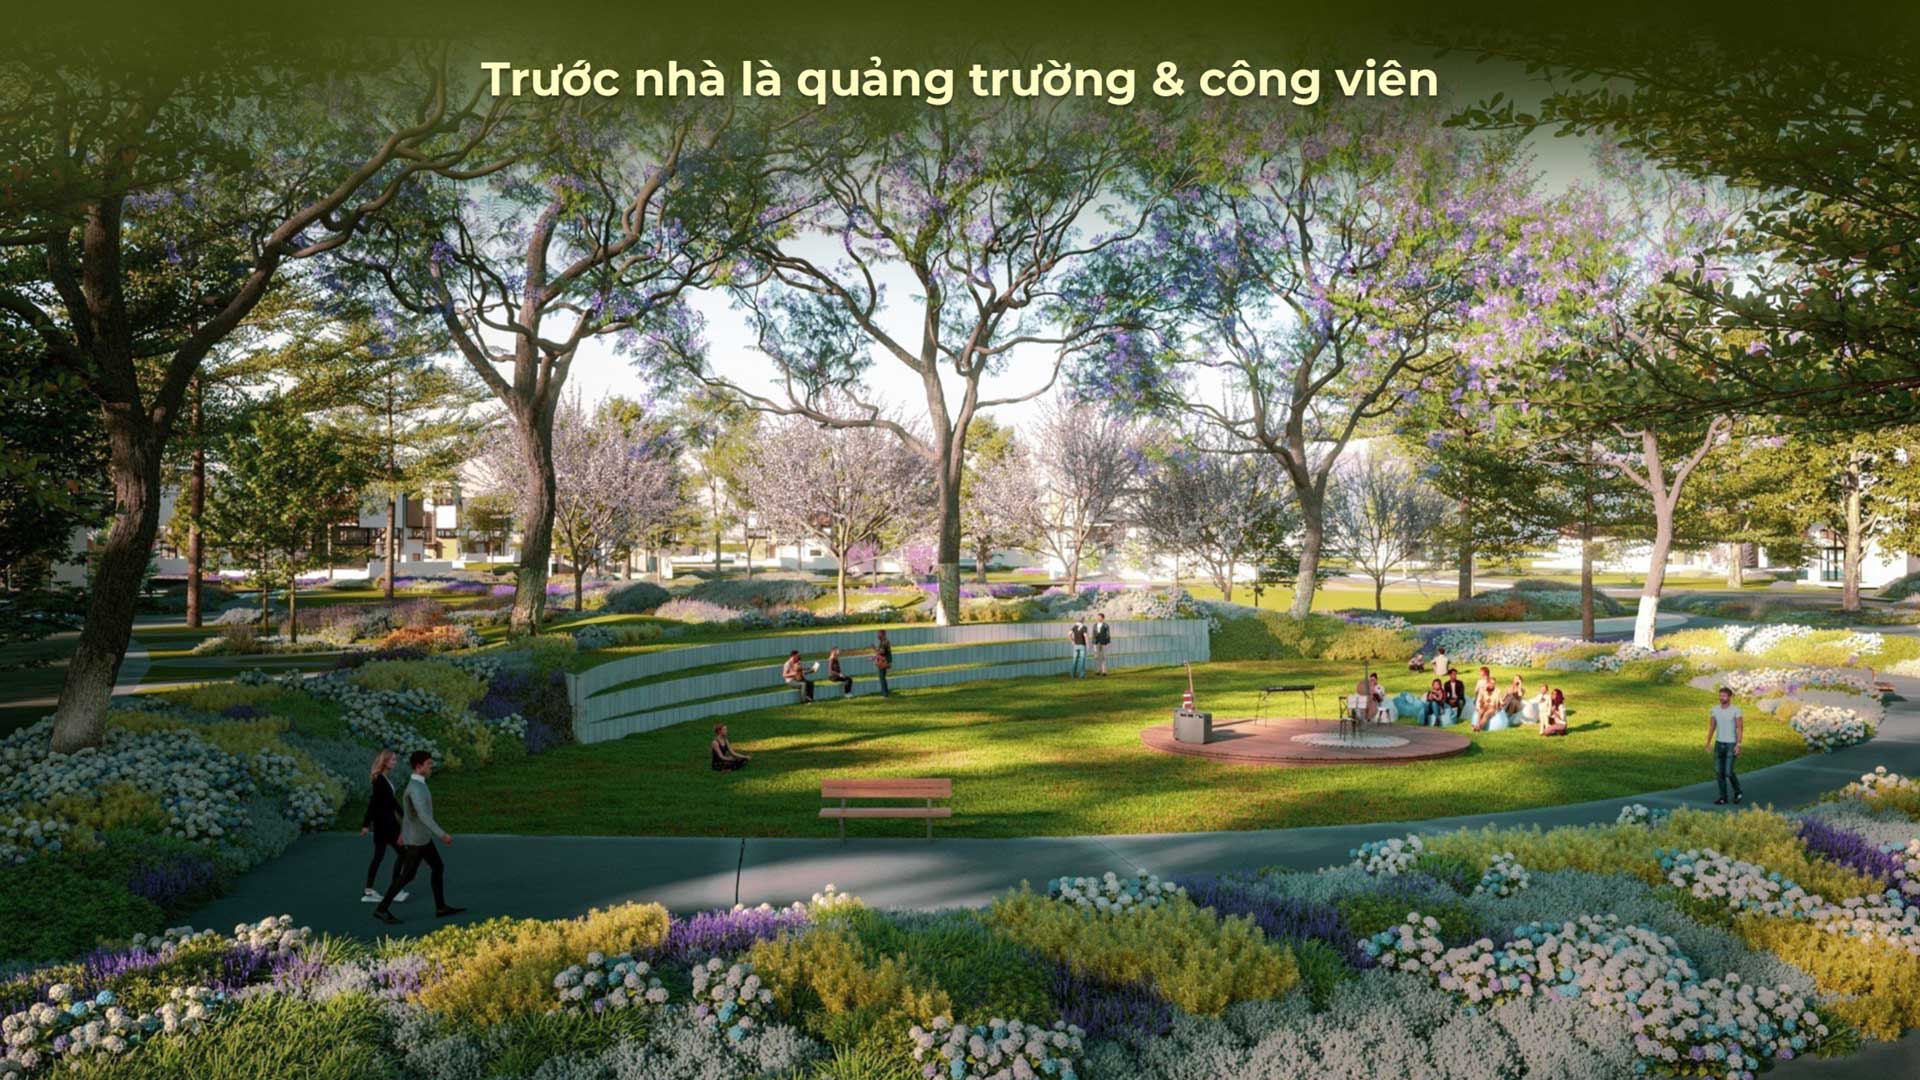 Ecovillage truoc nha la quang truong va cong vien - Eco Village Saigon River